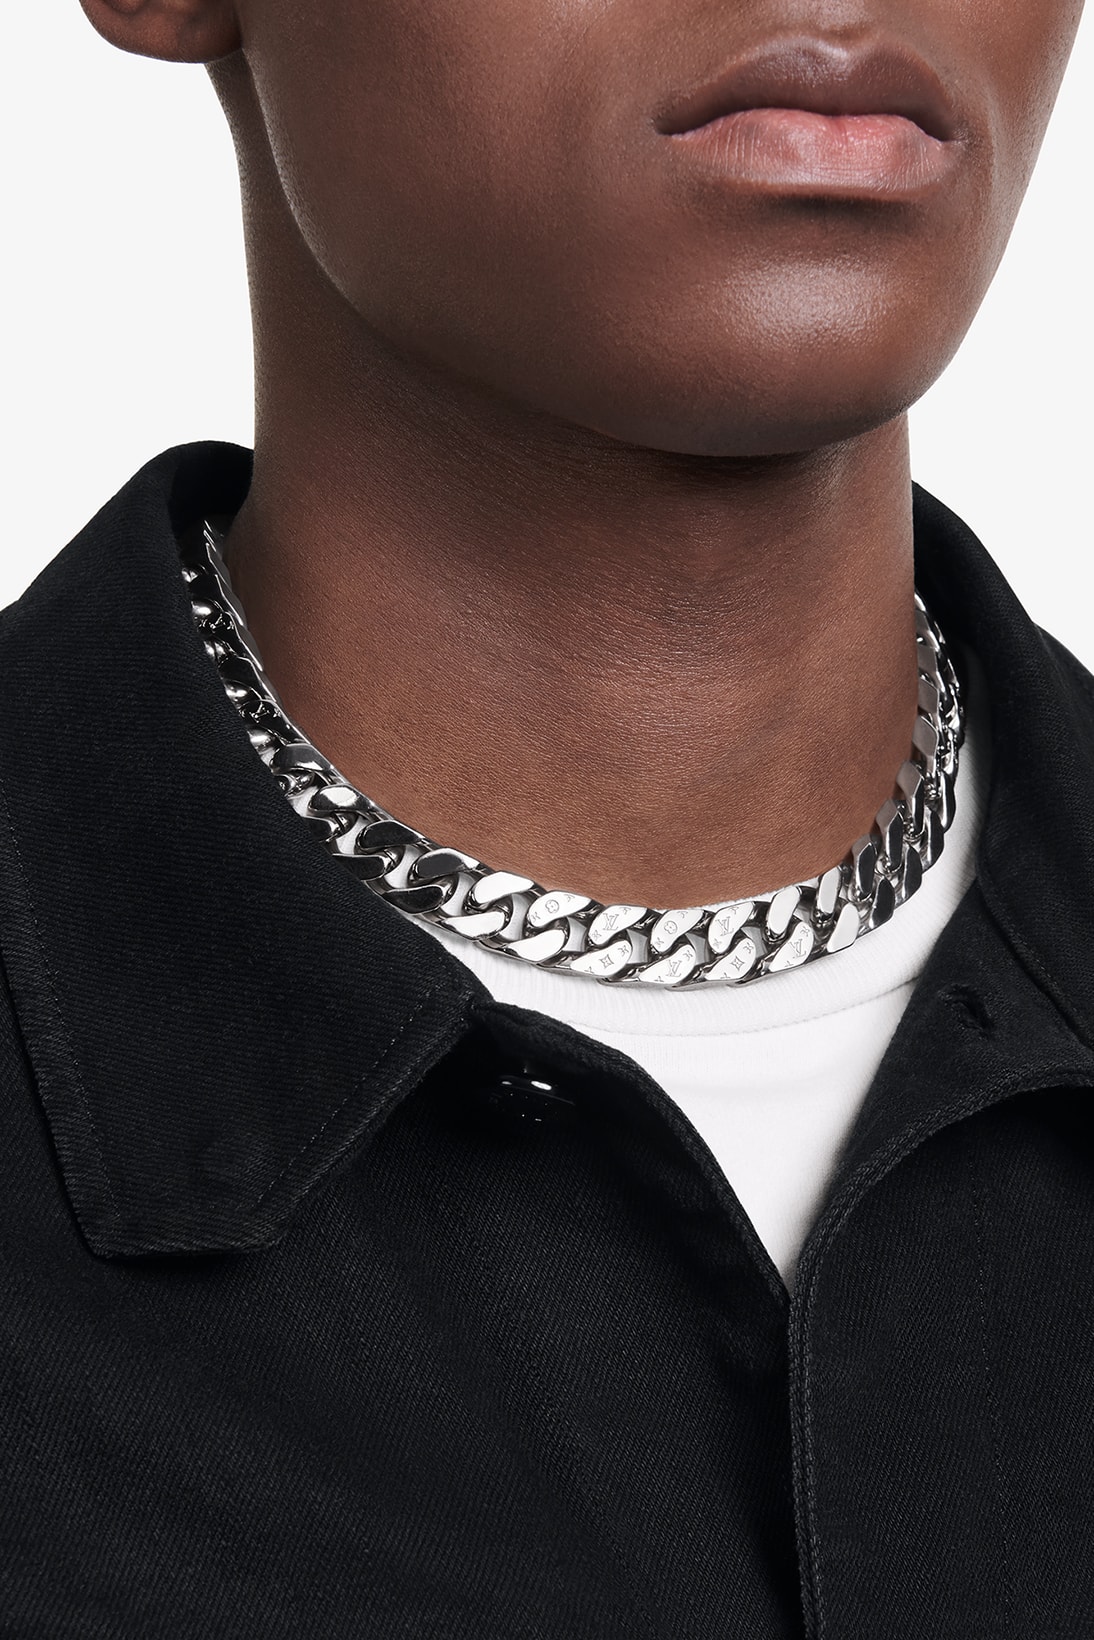 Louis Vuitton necklace jewellery for men 